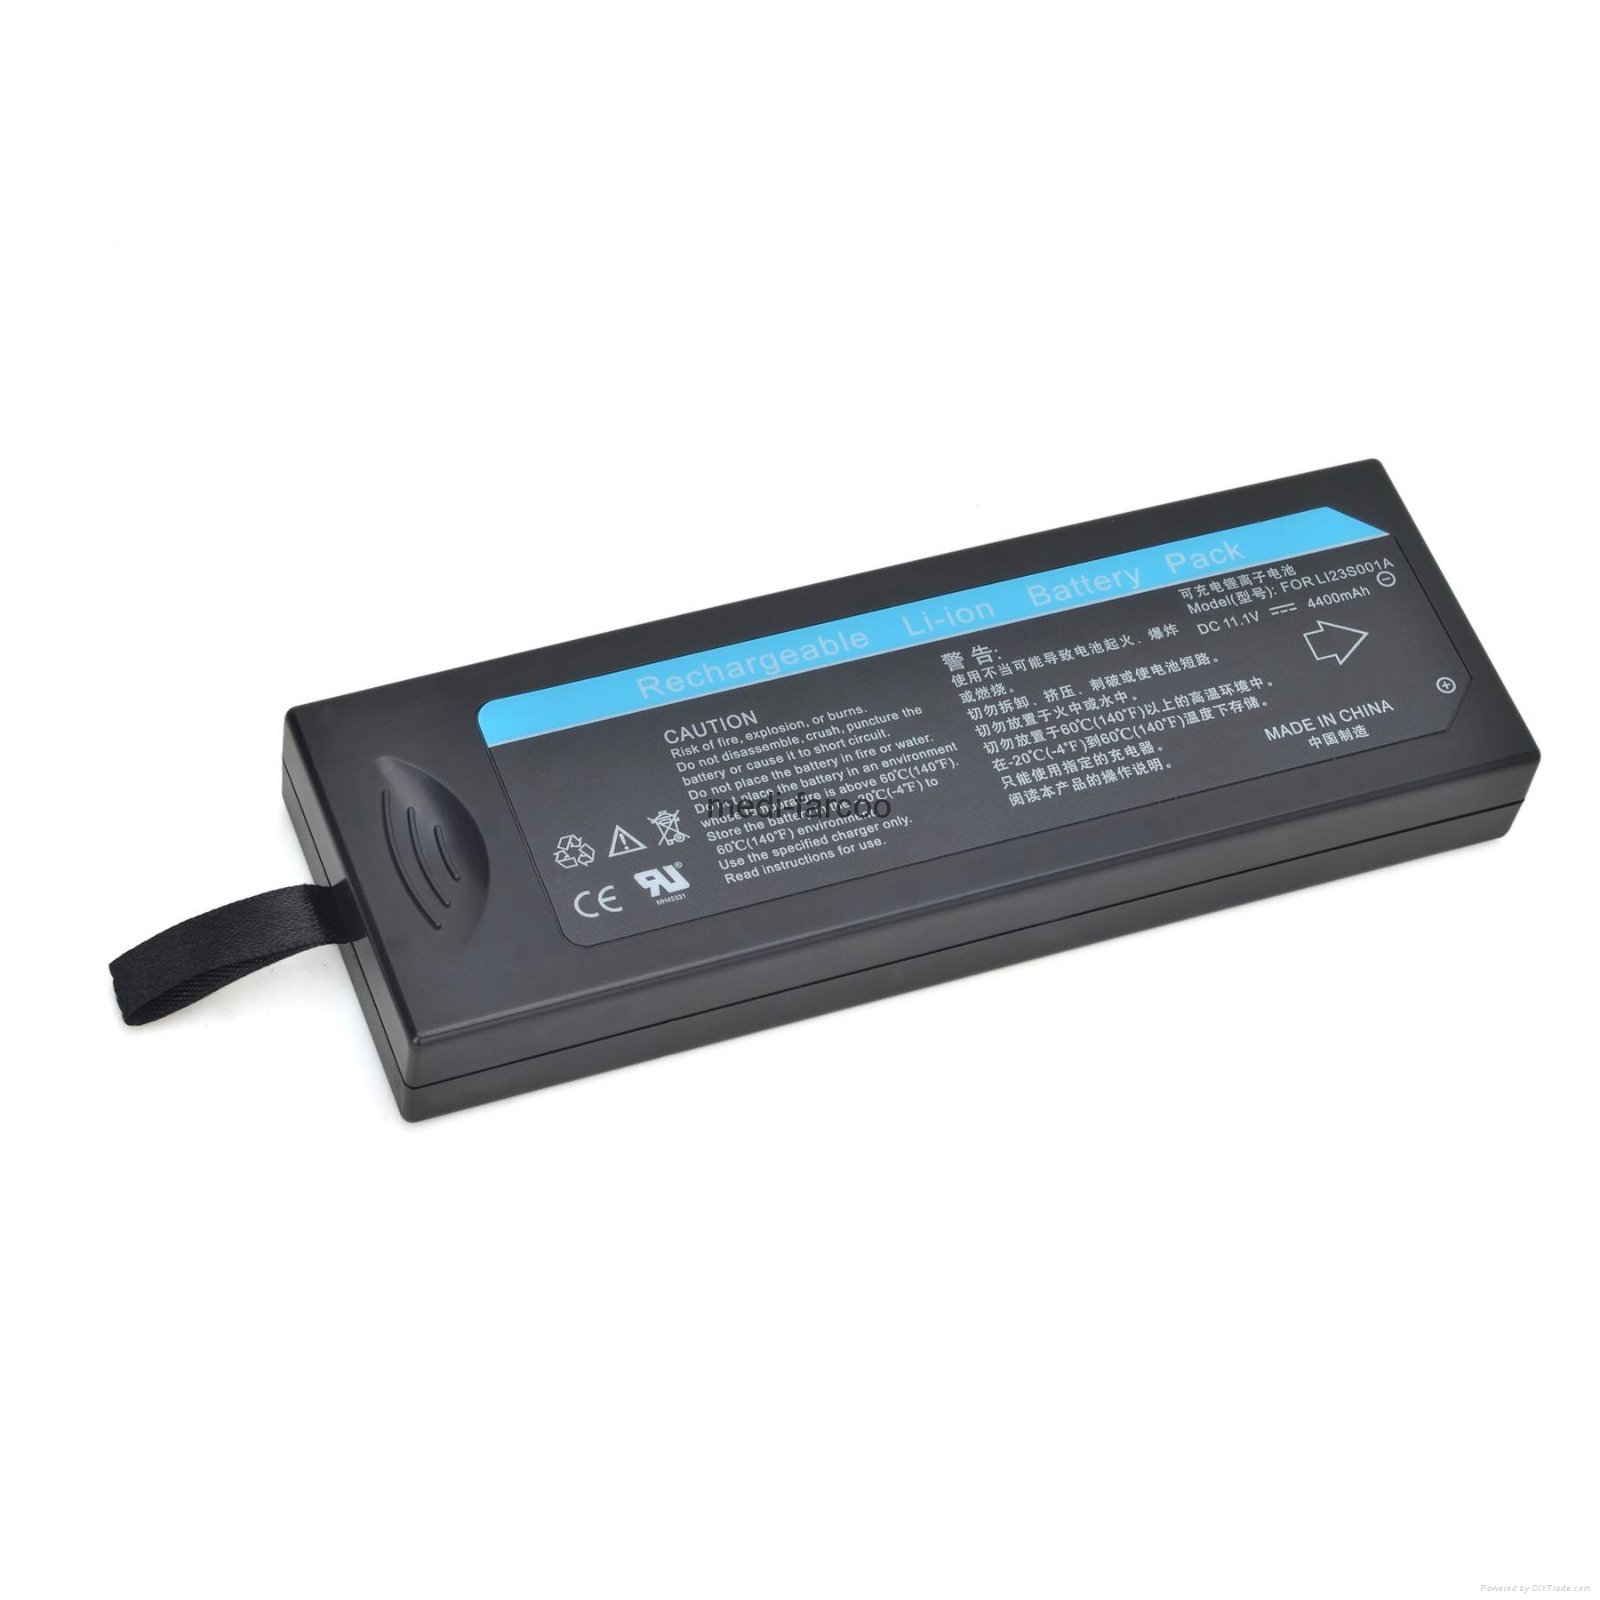  Battery LI23S001A for Mindray VS800 PM7000 PM8000 PM9000 2